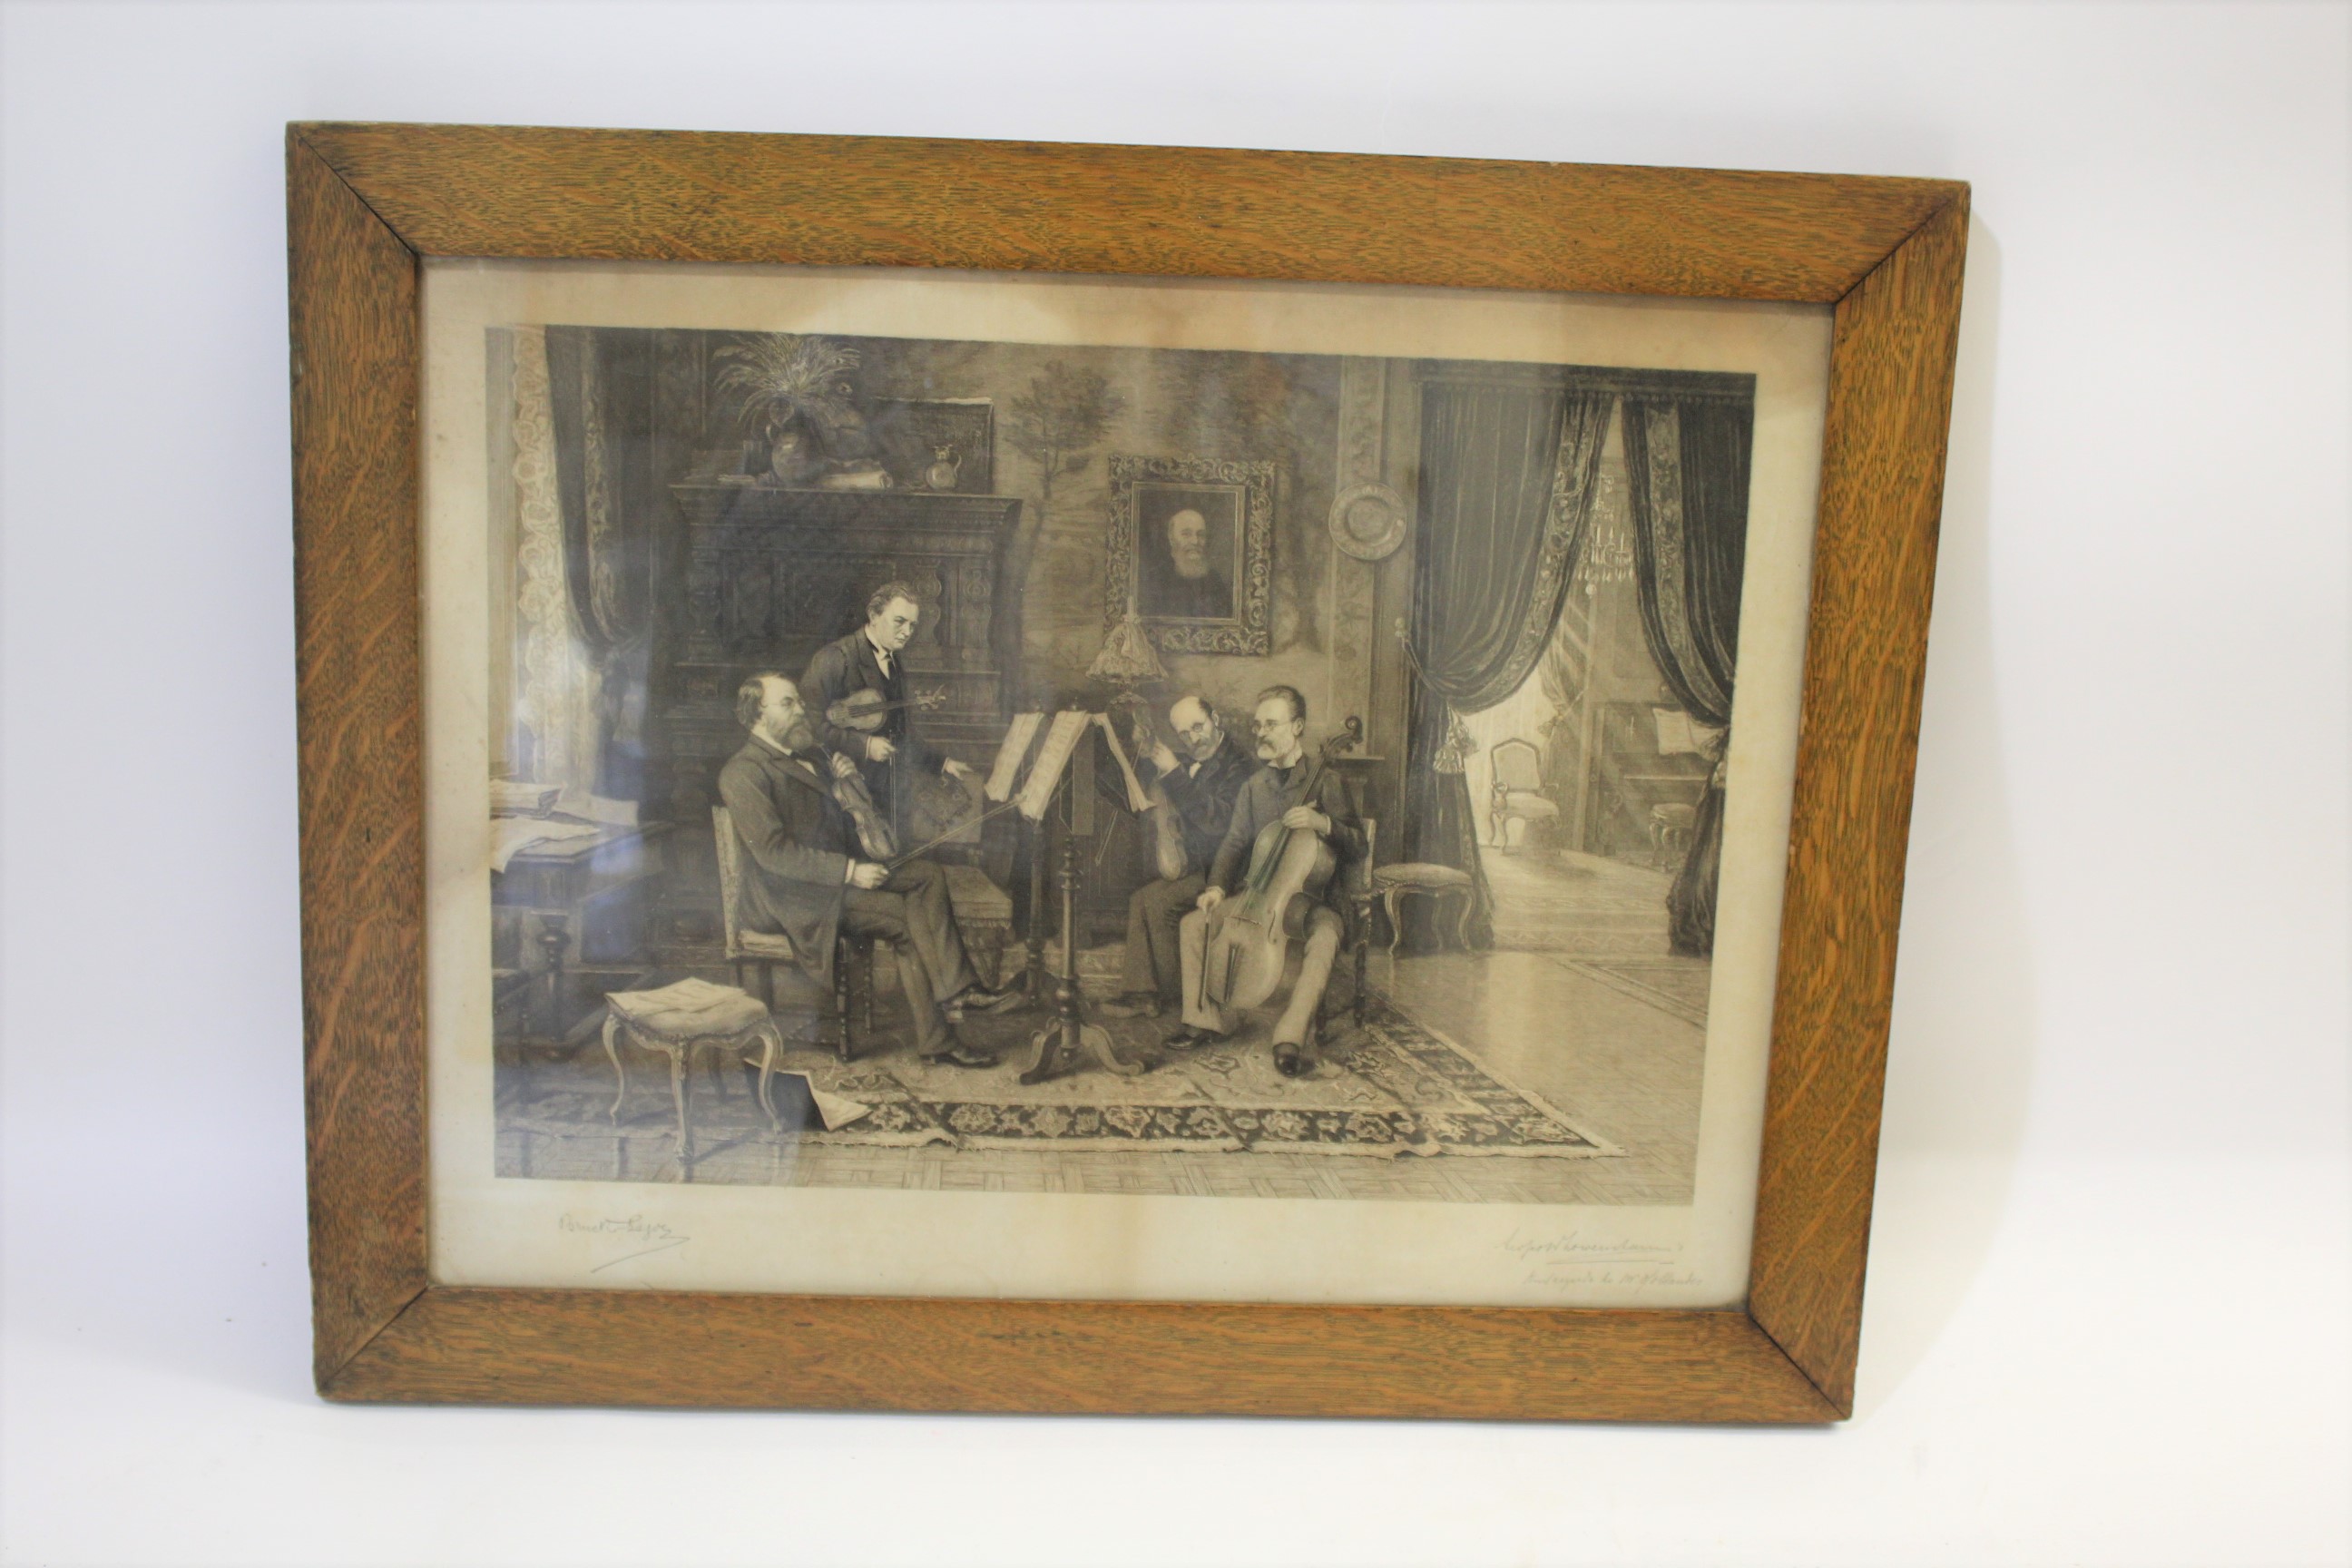 19THC FRAMED ENGRAVING - THE 'JOACHIM QUARTET' a 19thc framed engraving of 4 musicians, signed by - Image 4 of 4